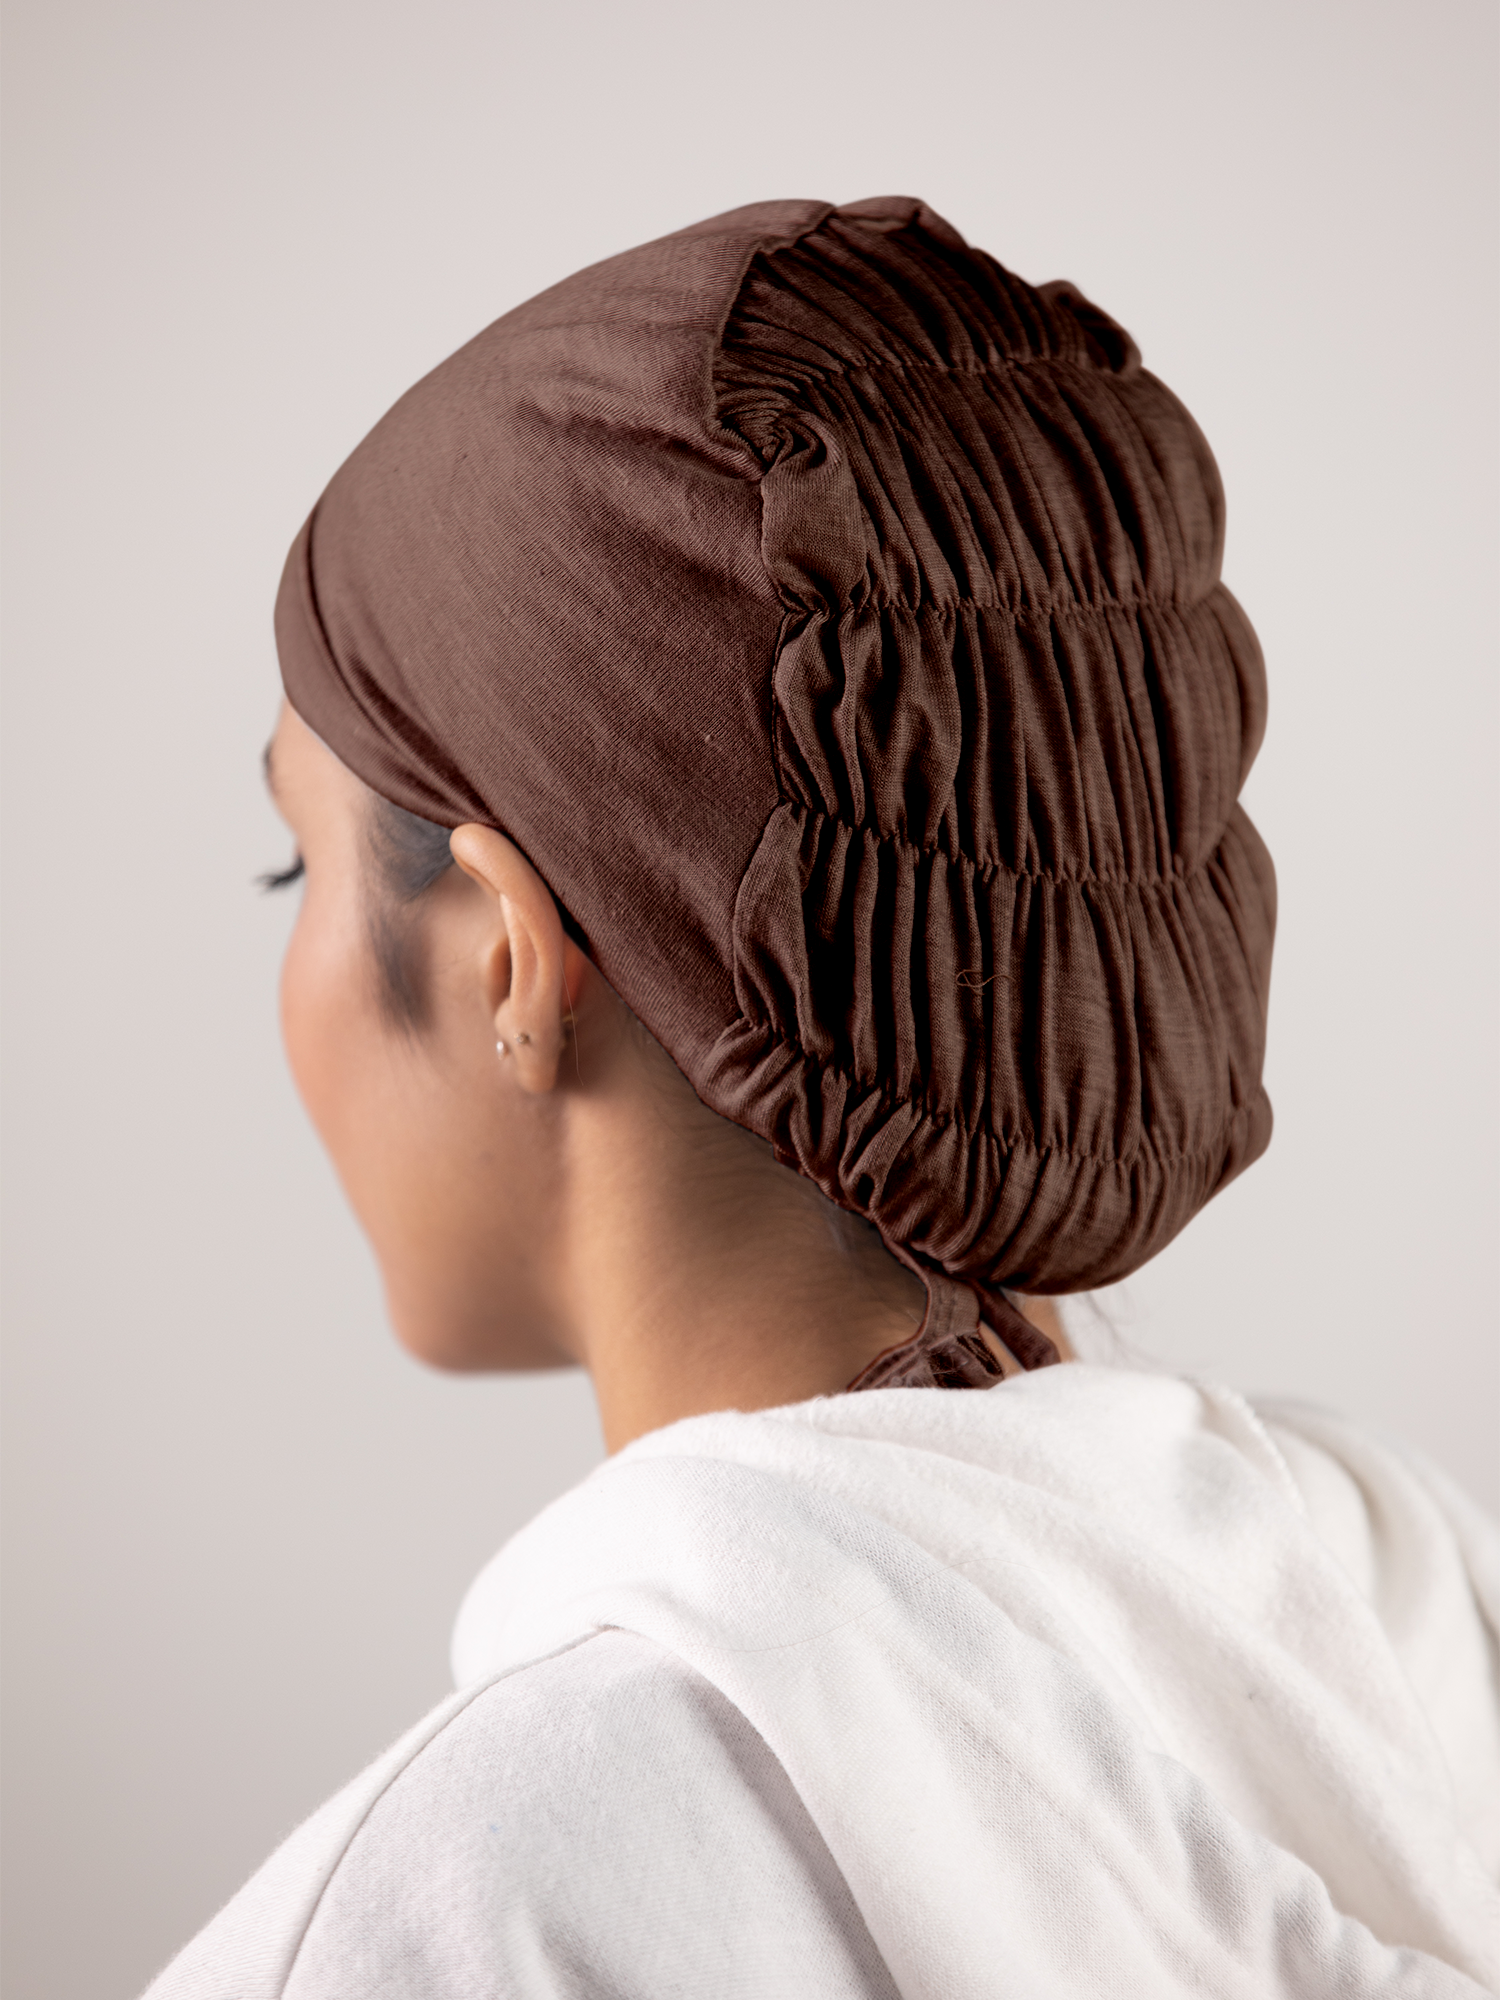 Ruched Hijab Cap in Dark Brown